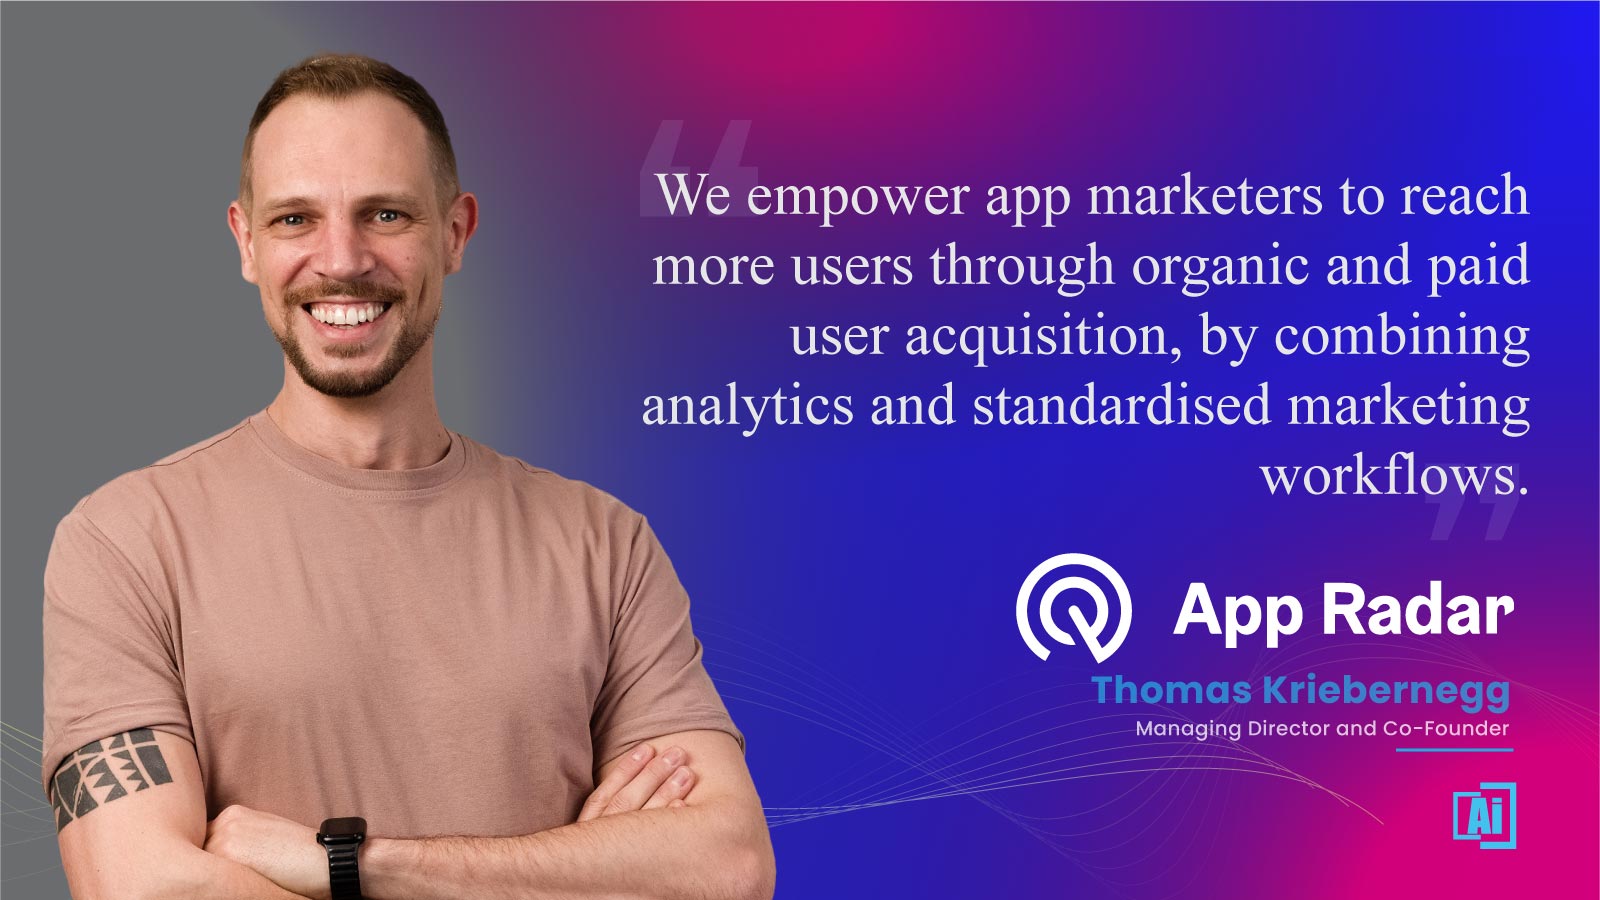 Thomas Kriebernegg, CEO and Co-Founder at App Radar